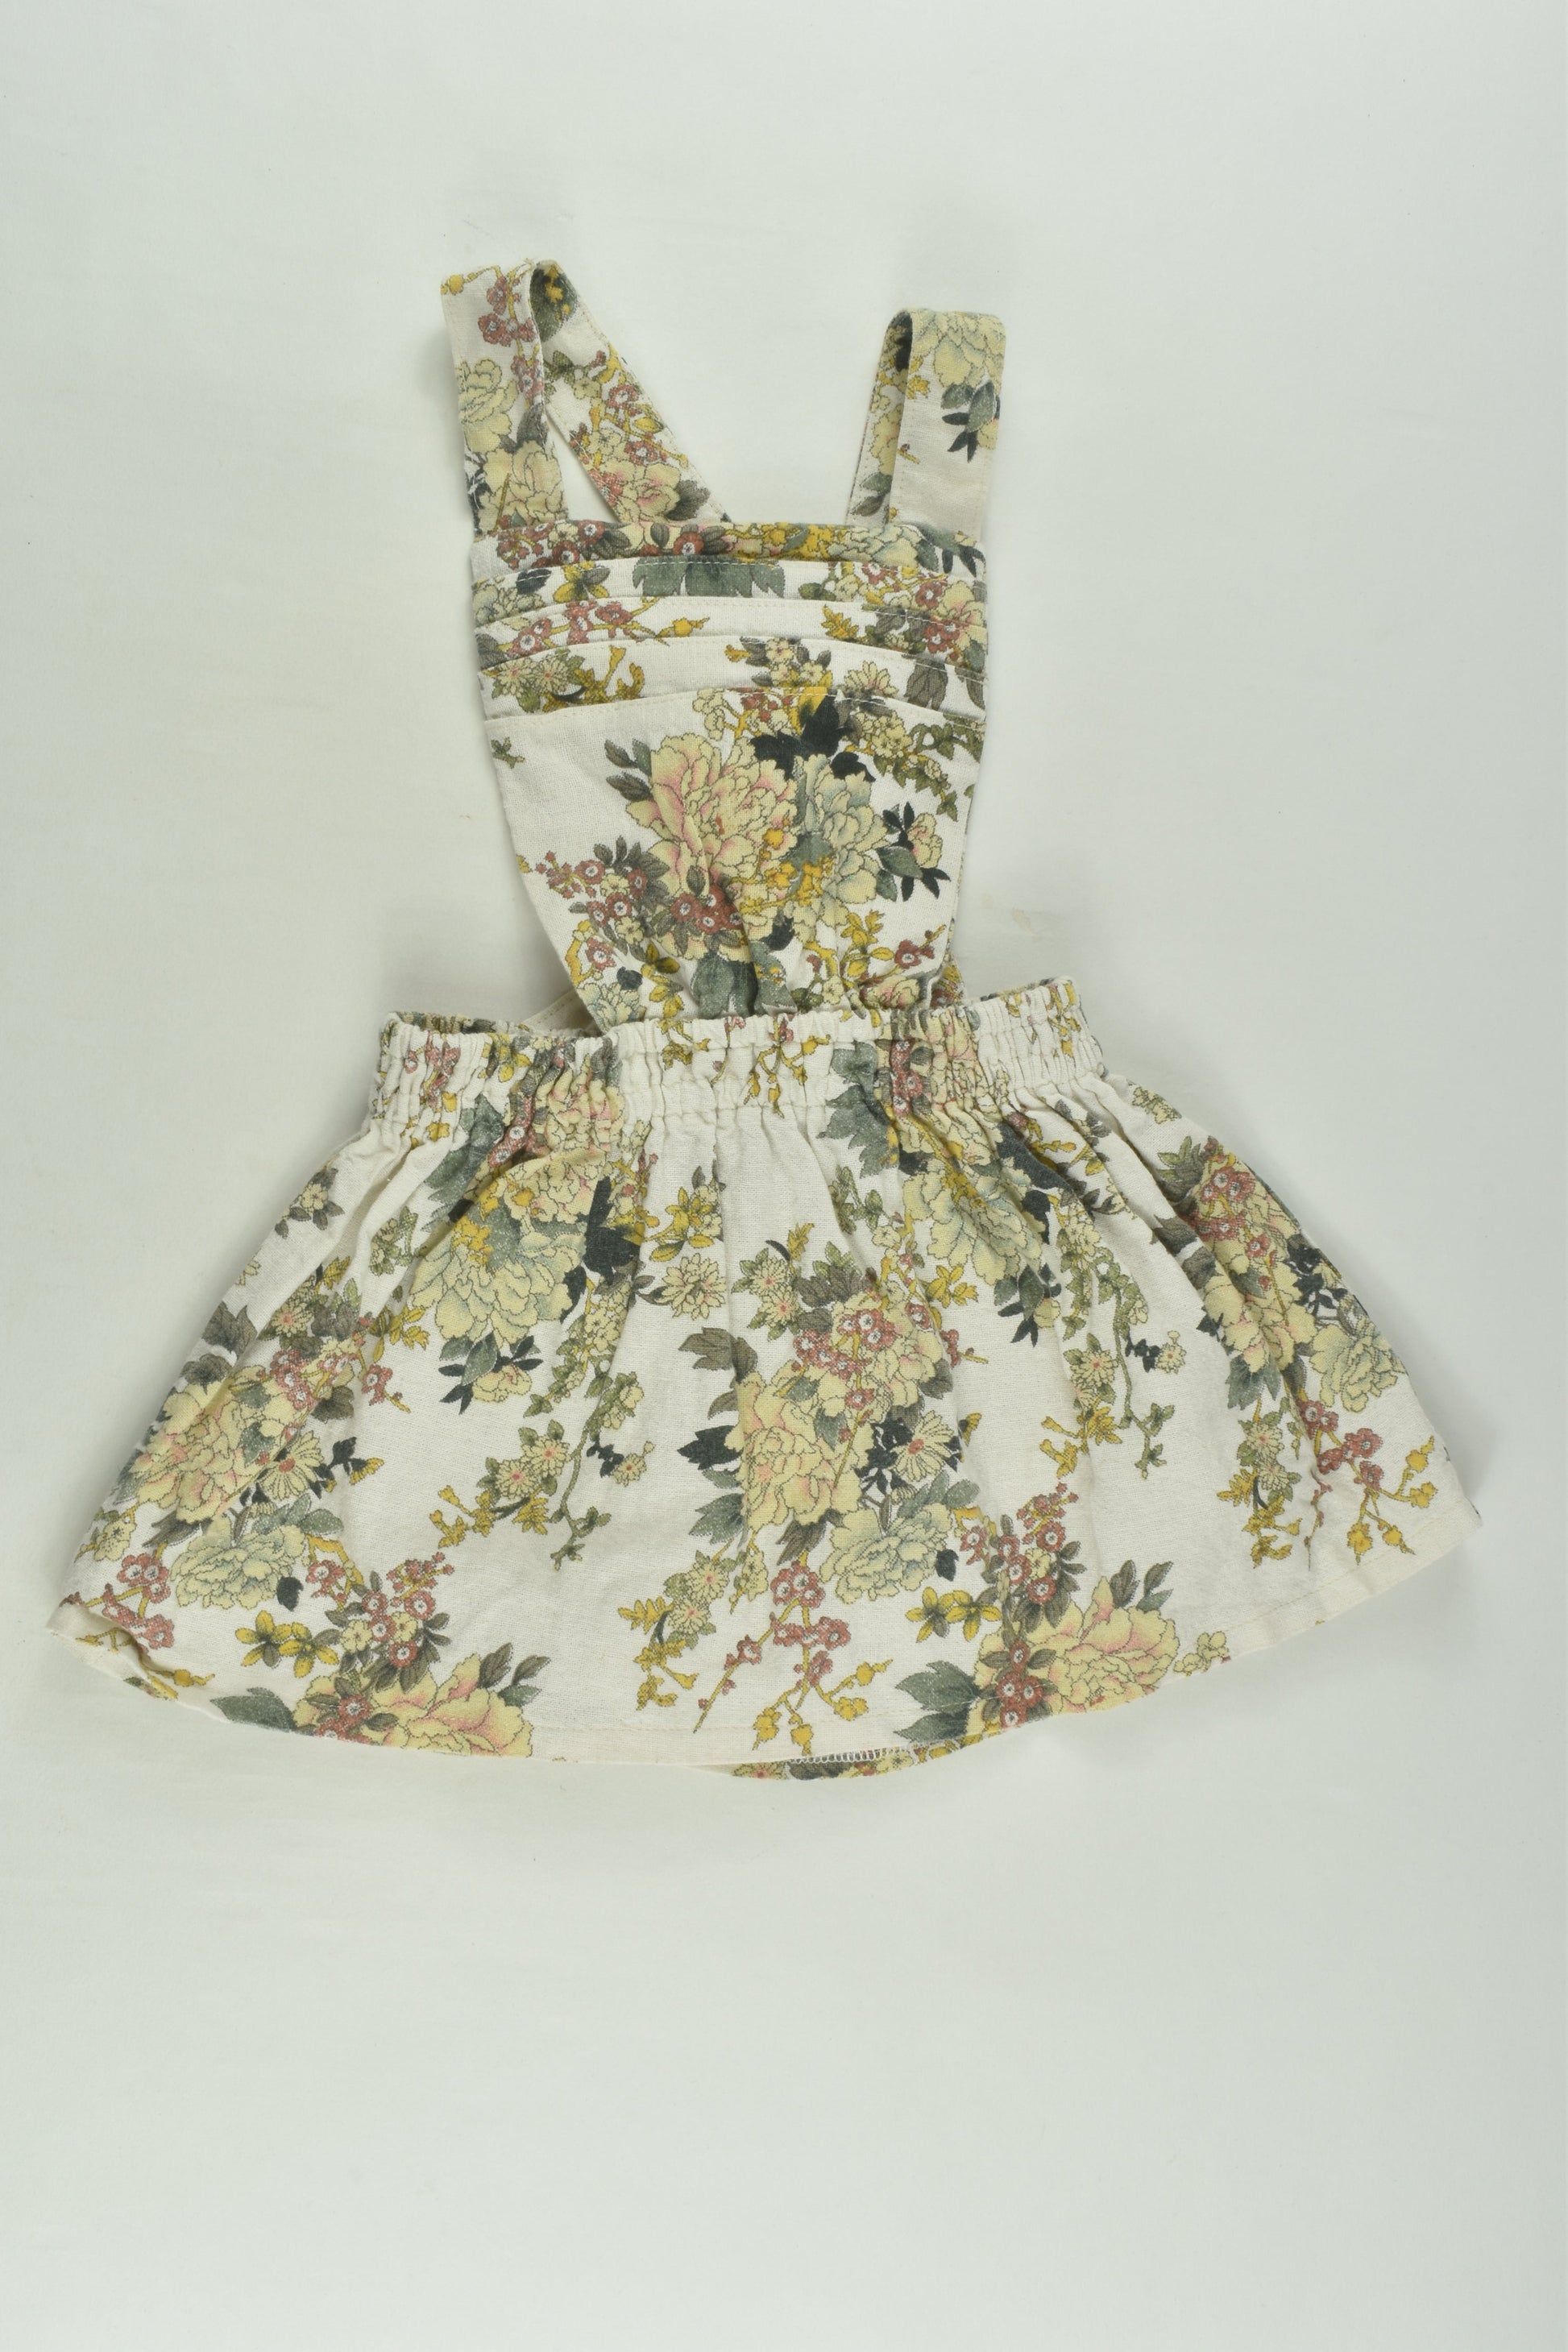 Handmade Size 0 Floral Dress